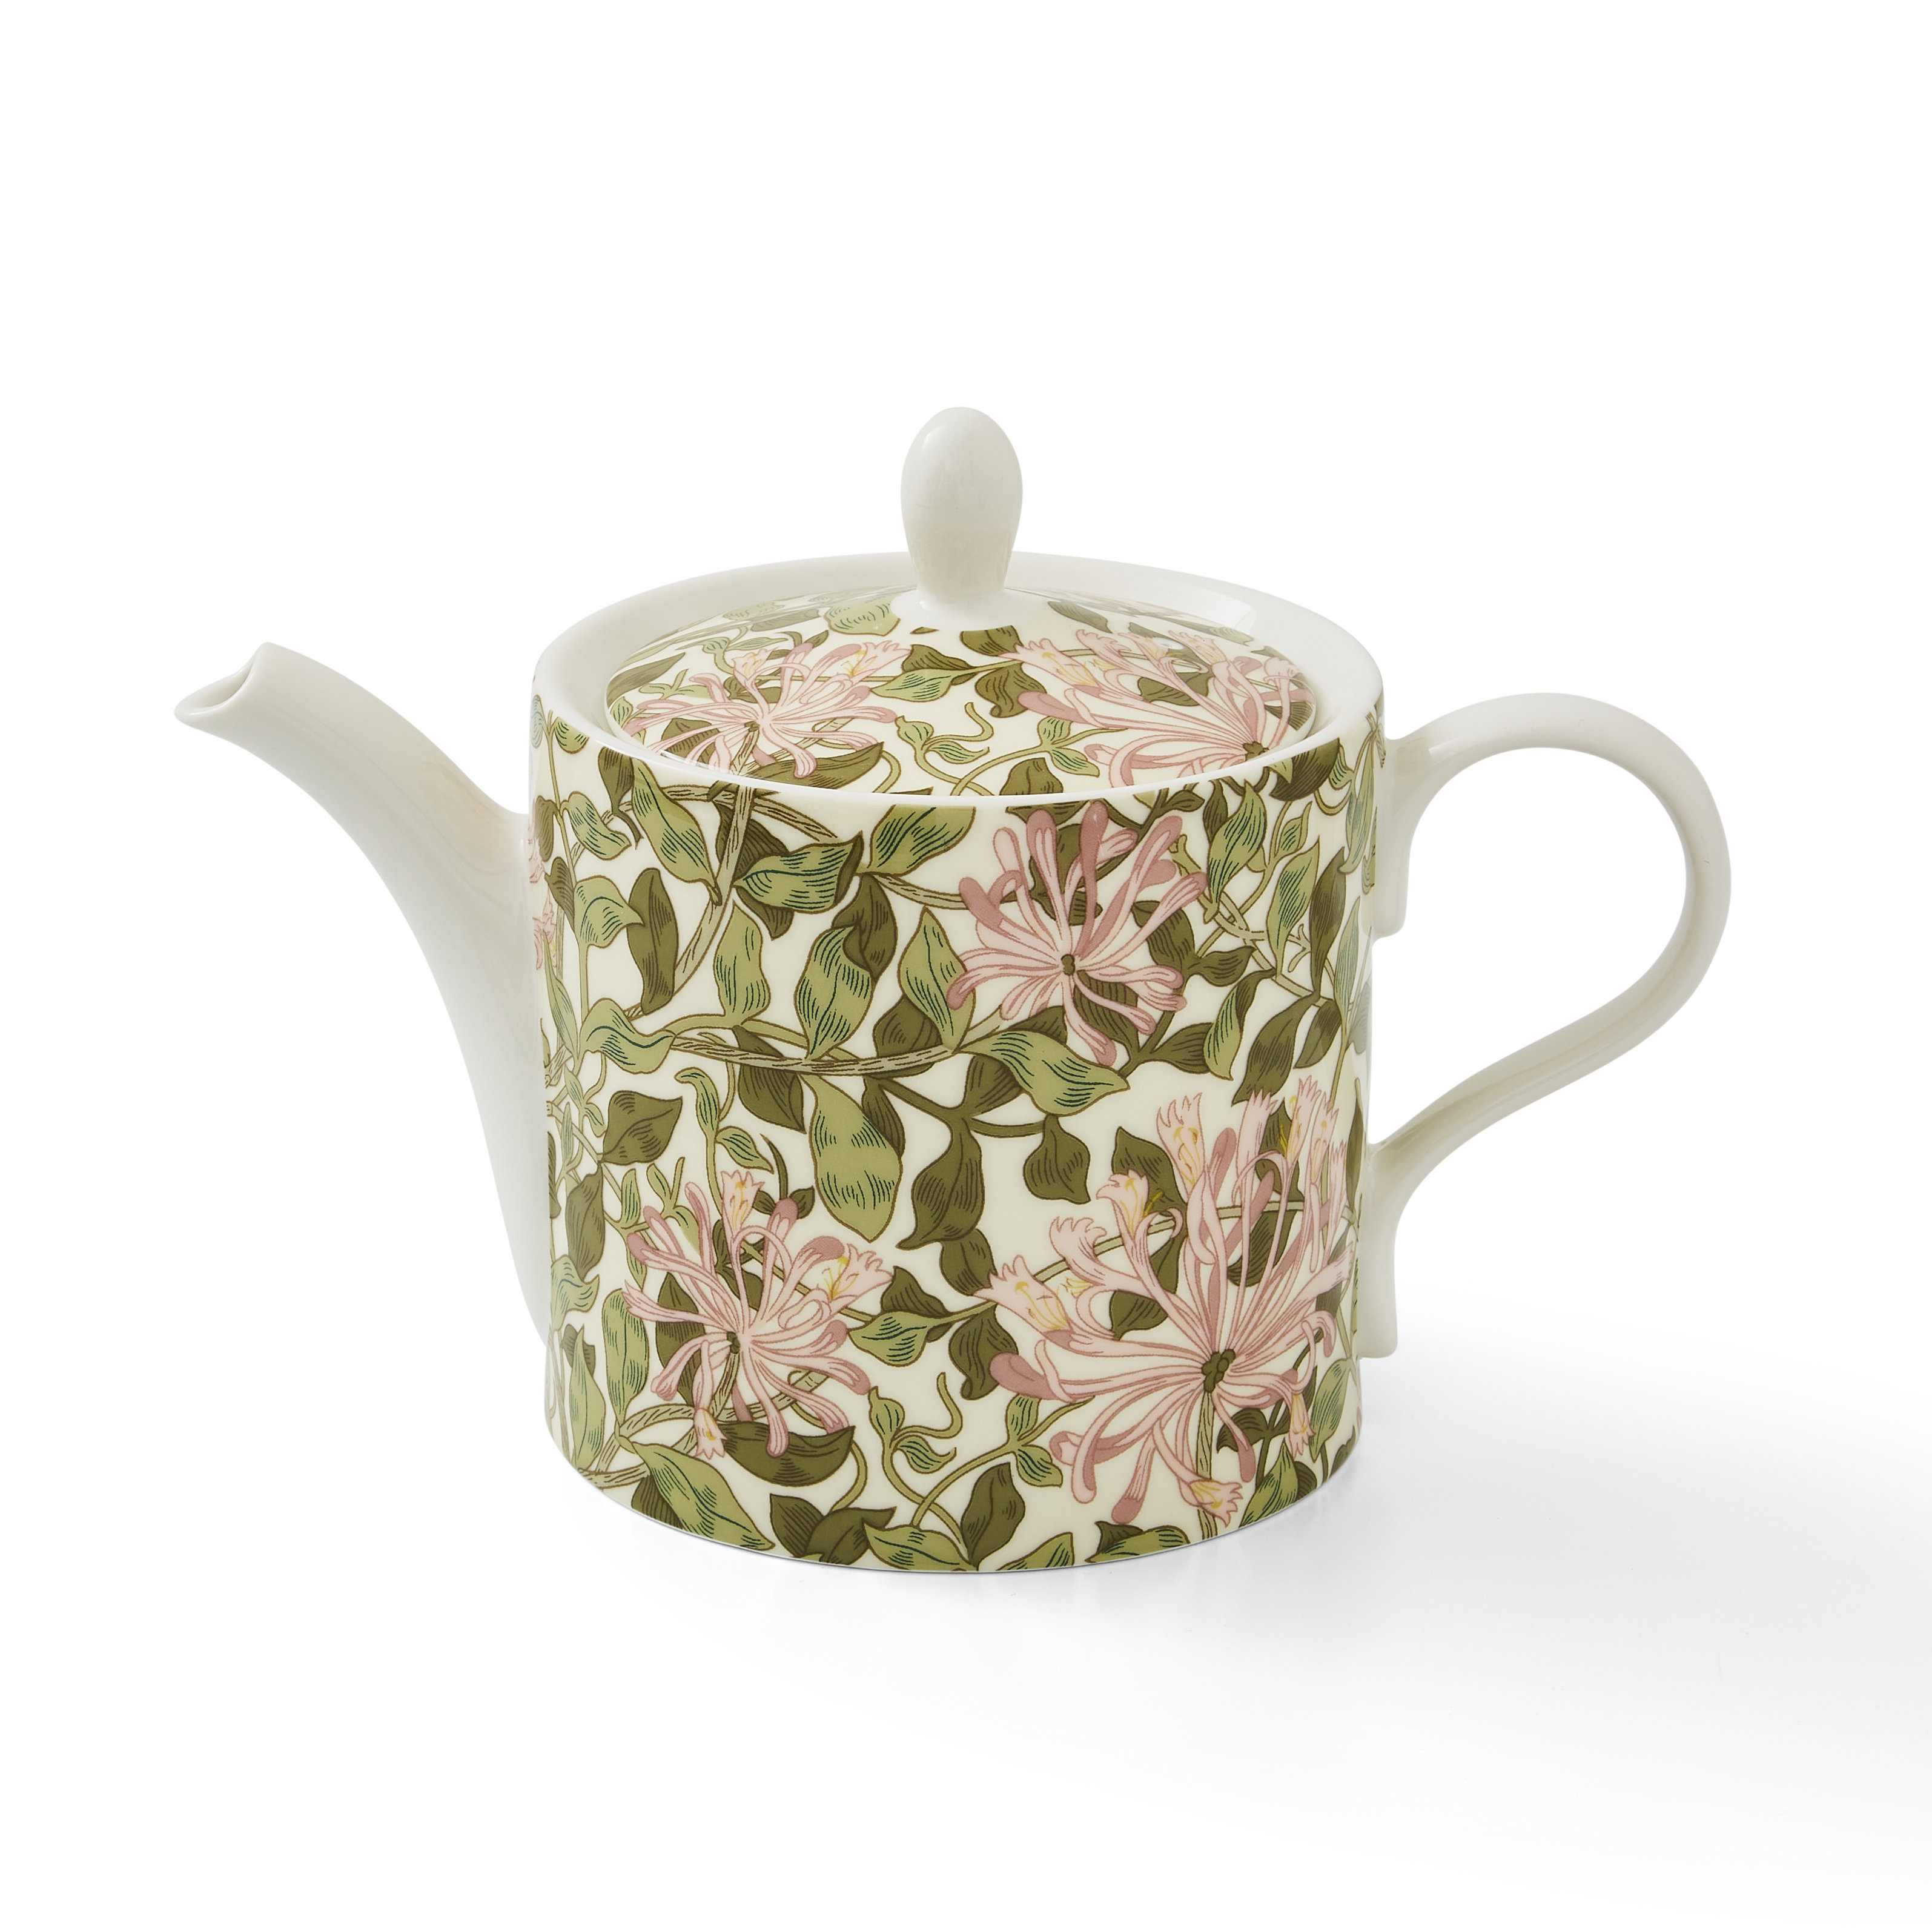 Spode Morris and Co. Honeysuckle Teapot | Wayfair.co.uk